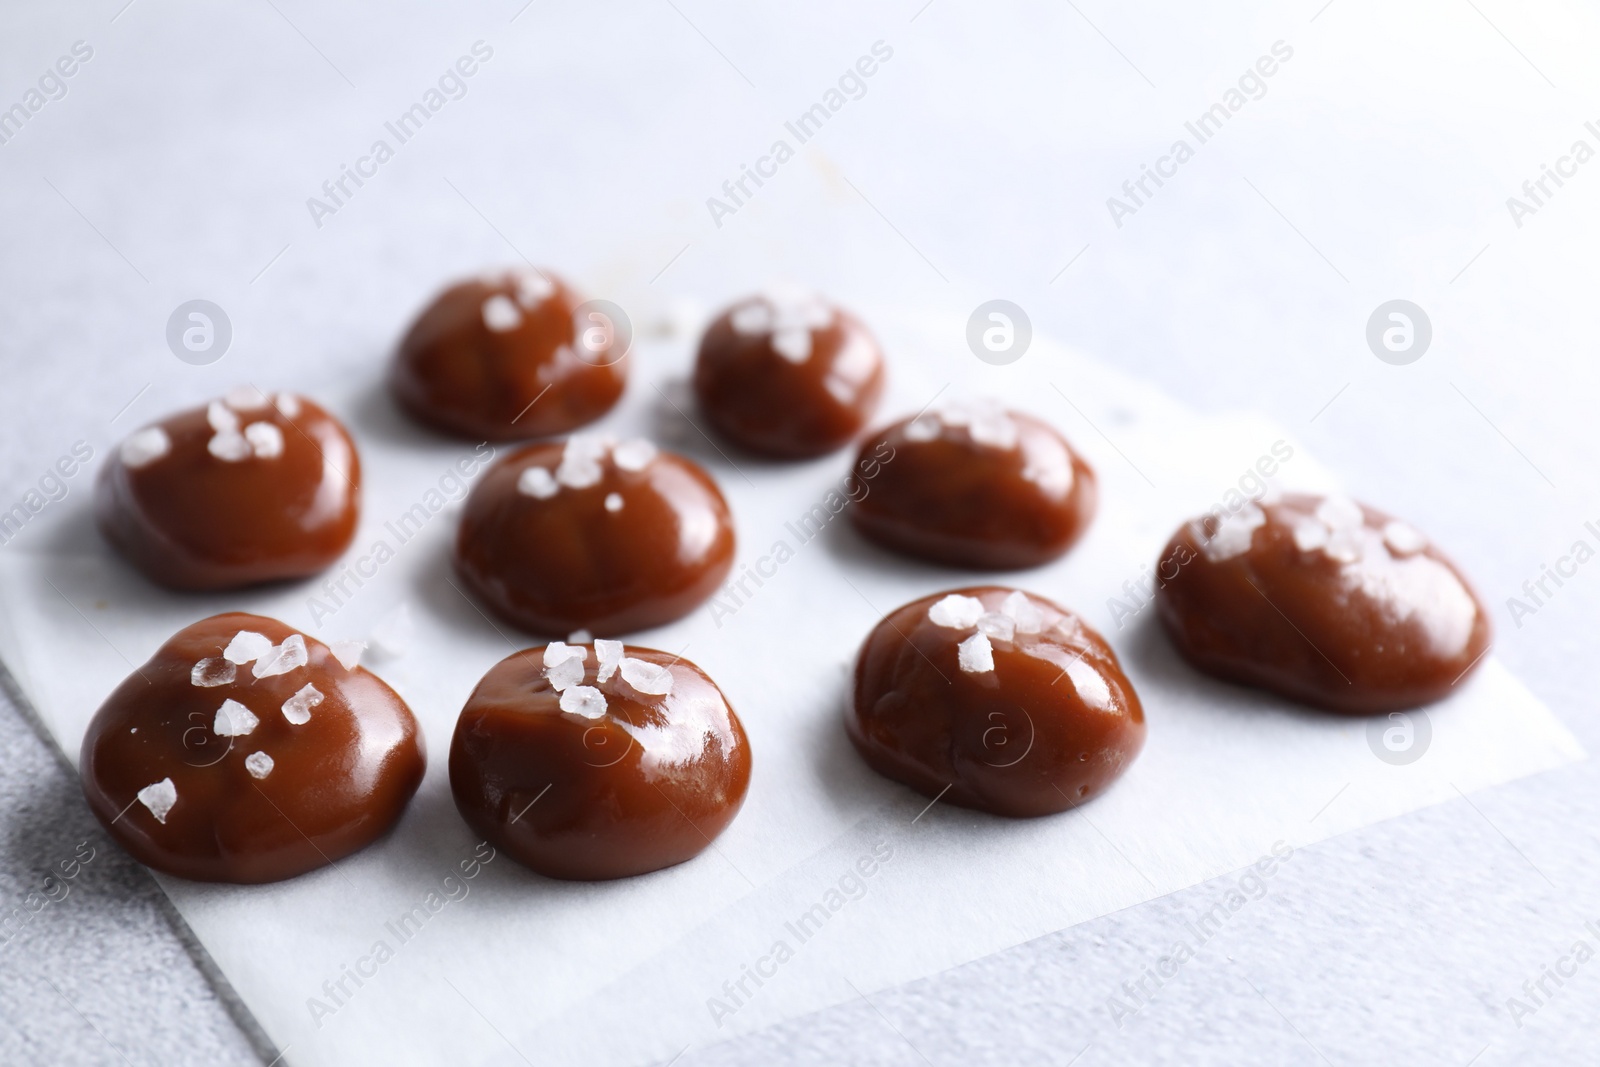 Photo of Tasty caramel candies and salt on light grey table, closeup